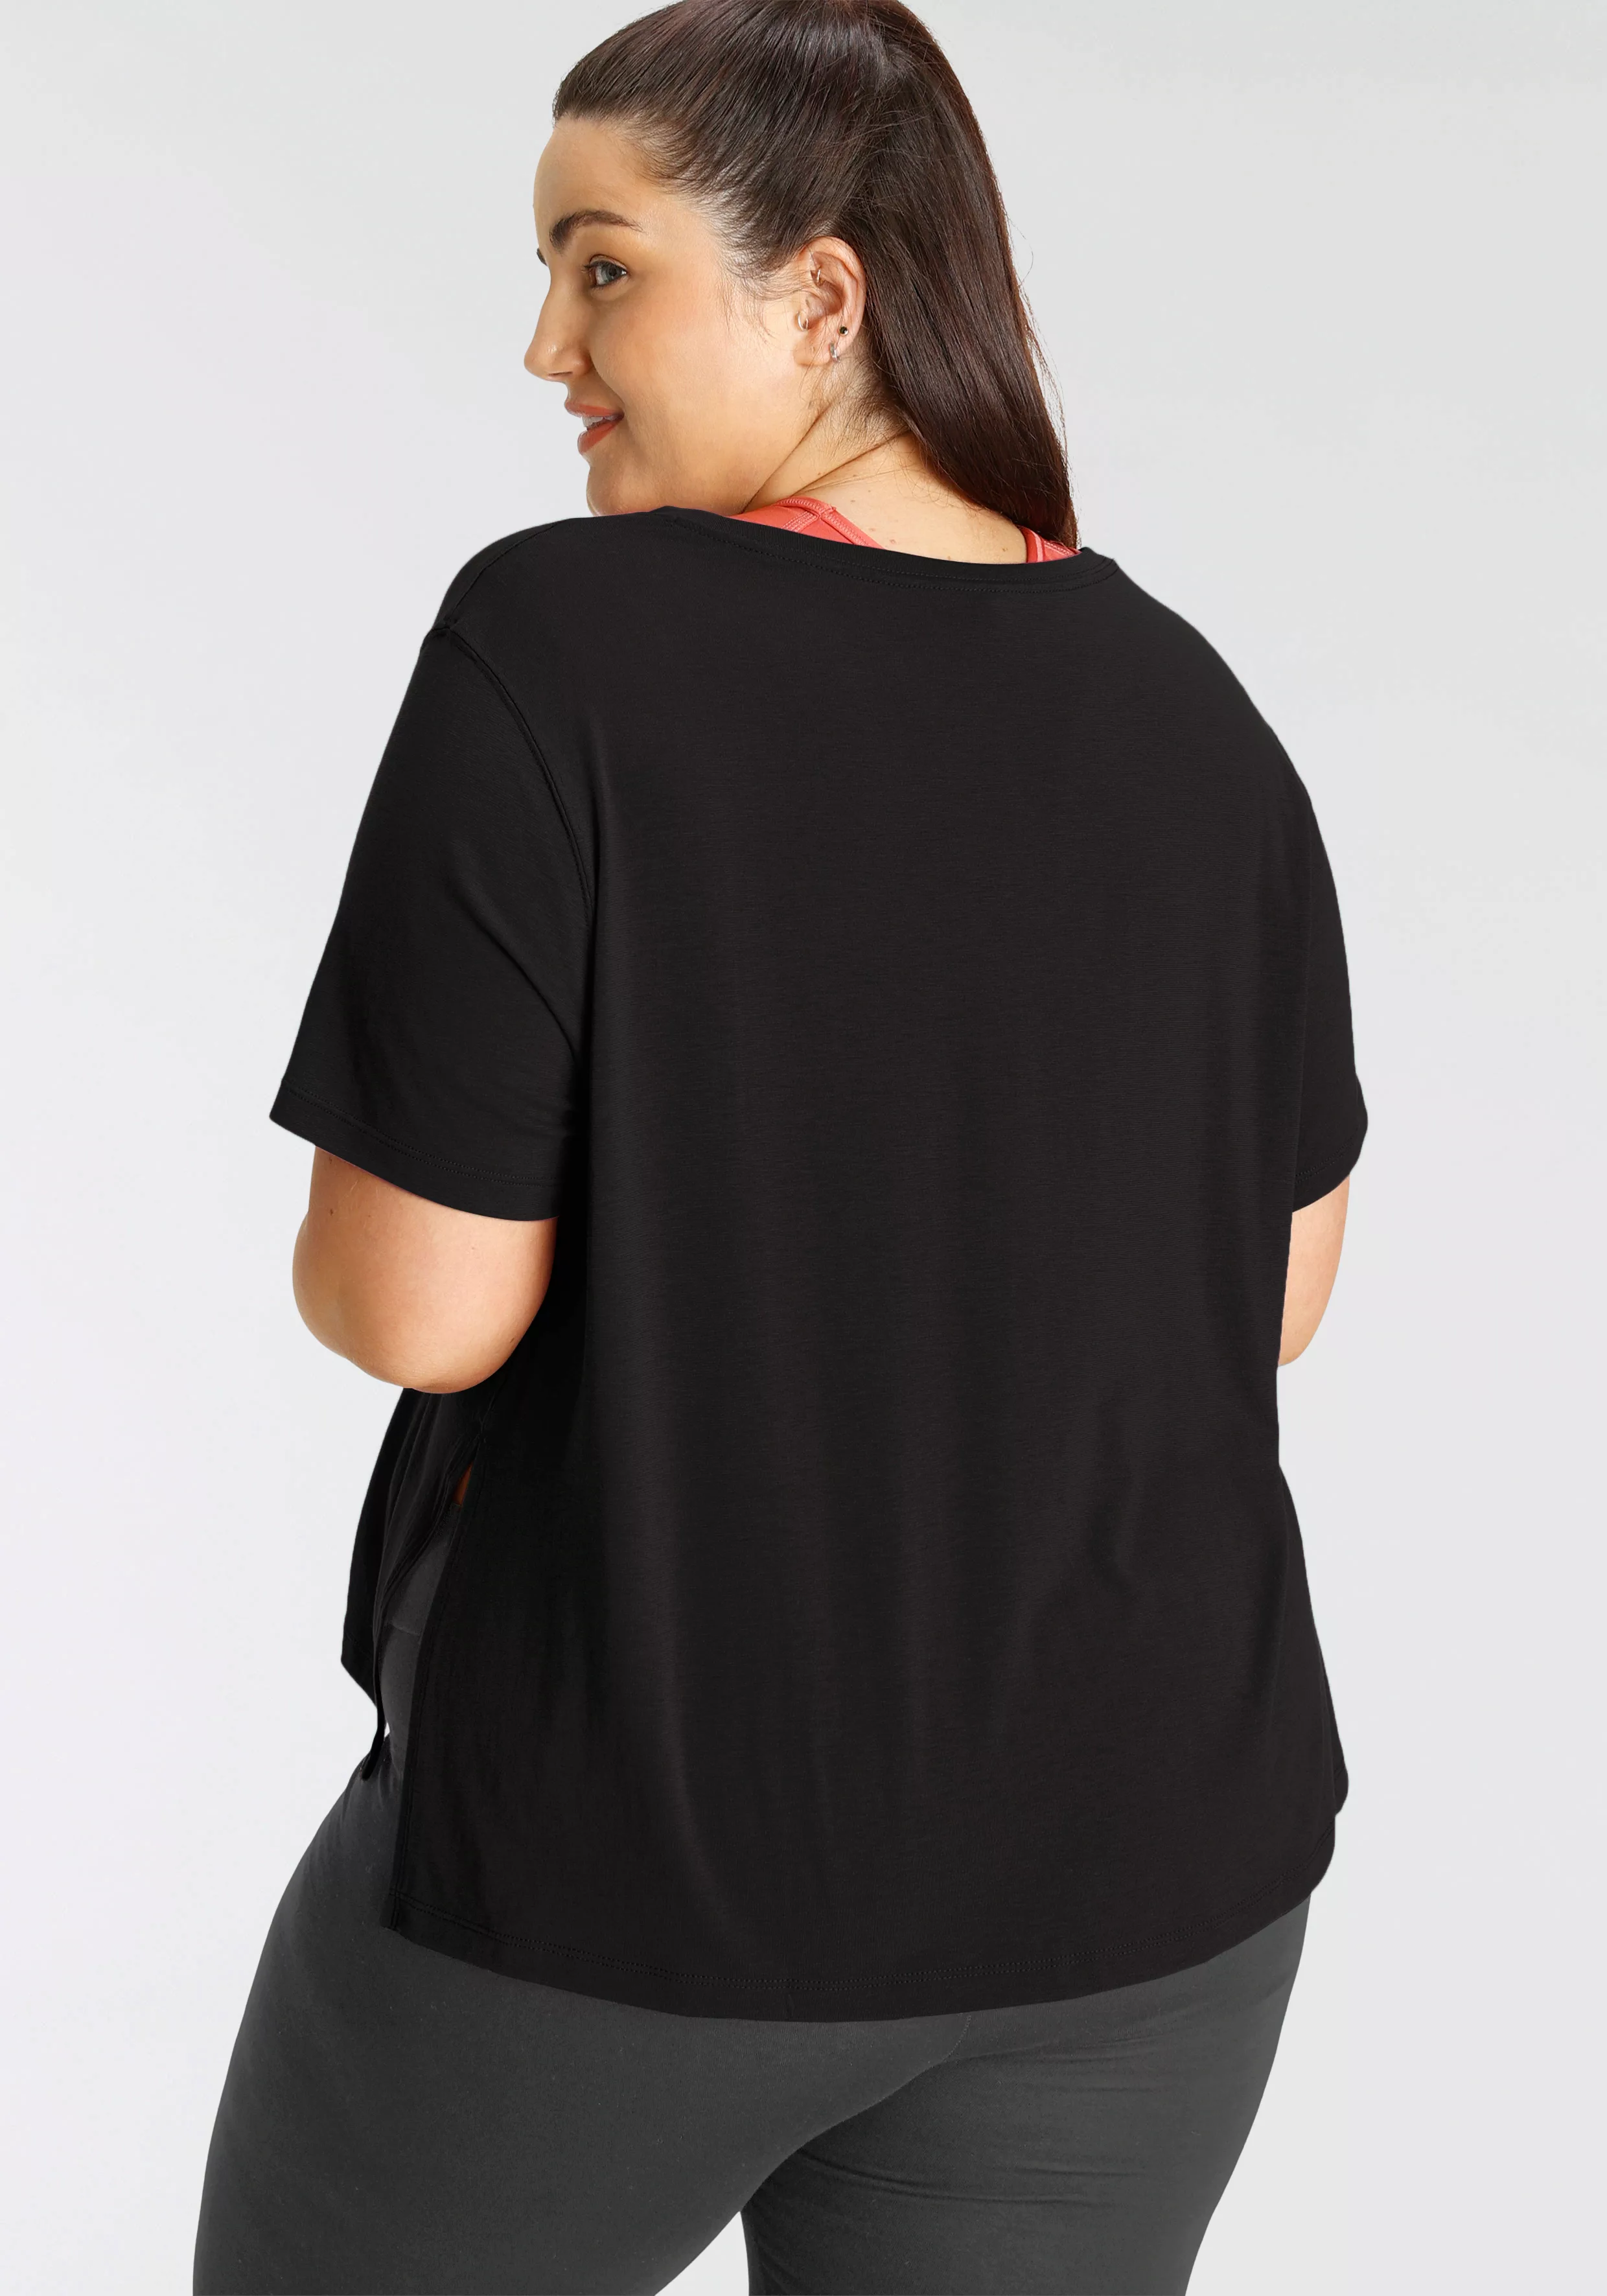 Nike Yogashirt "Yoga Dri-FIT Womens Top (Plus Size)" günstig online kaufen